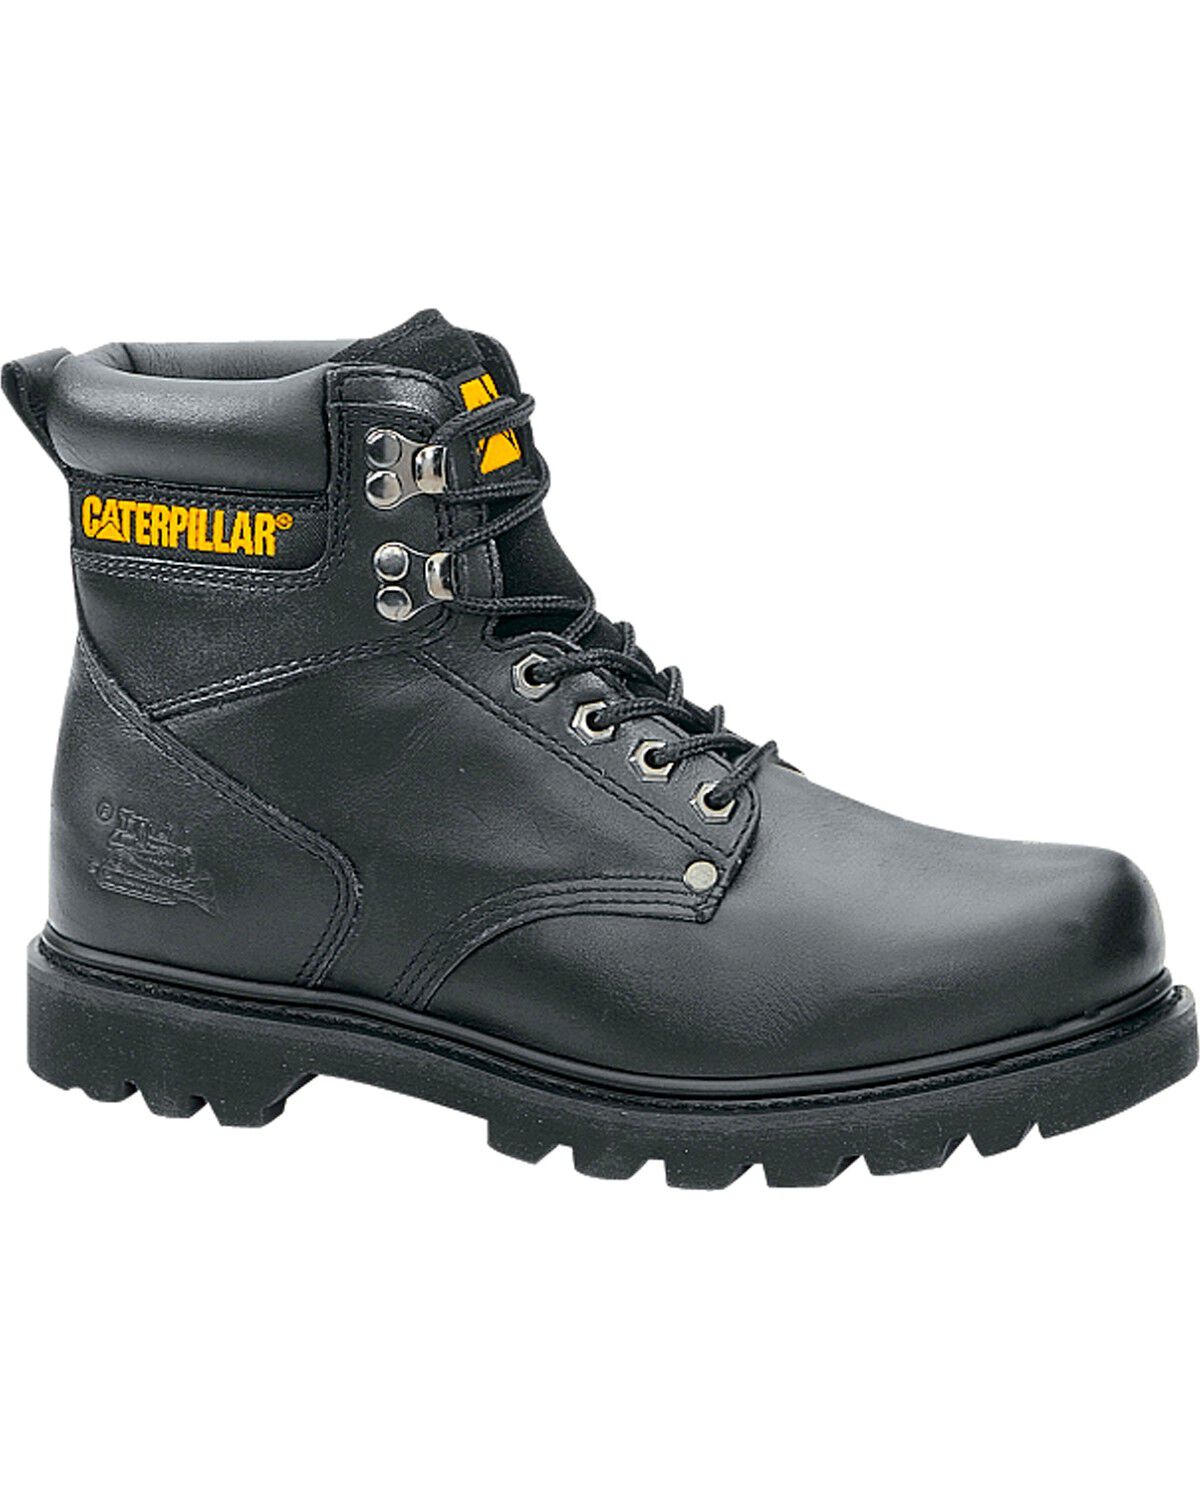 caterpillar steel toe boots price